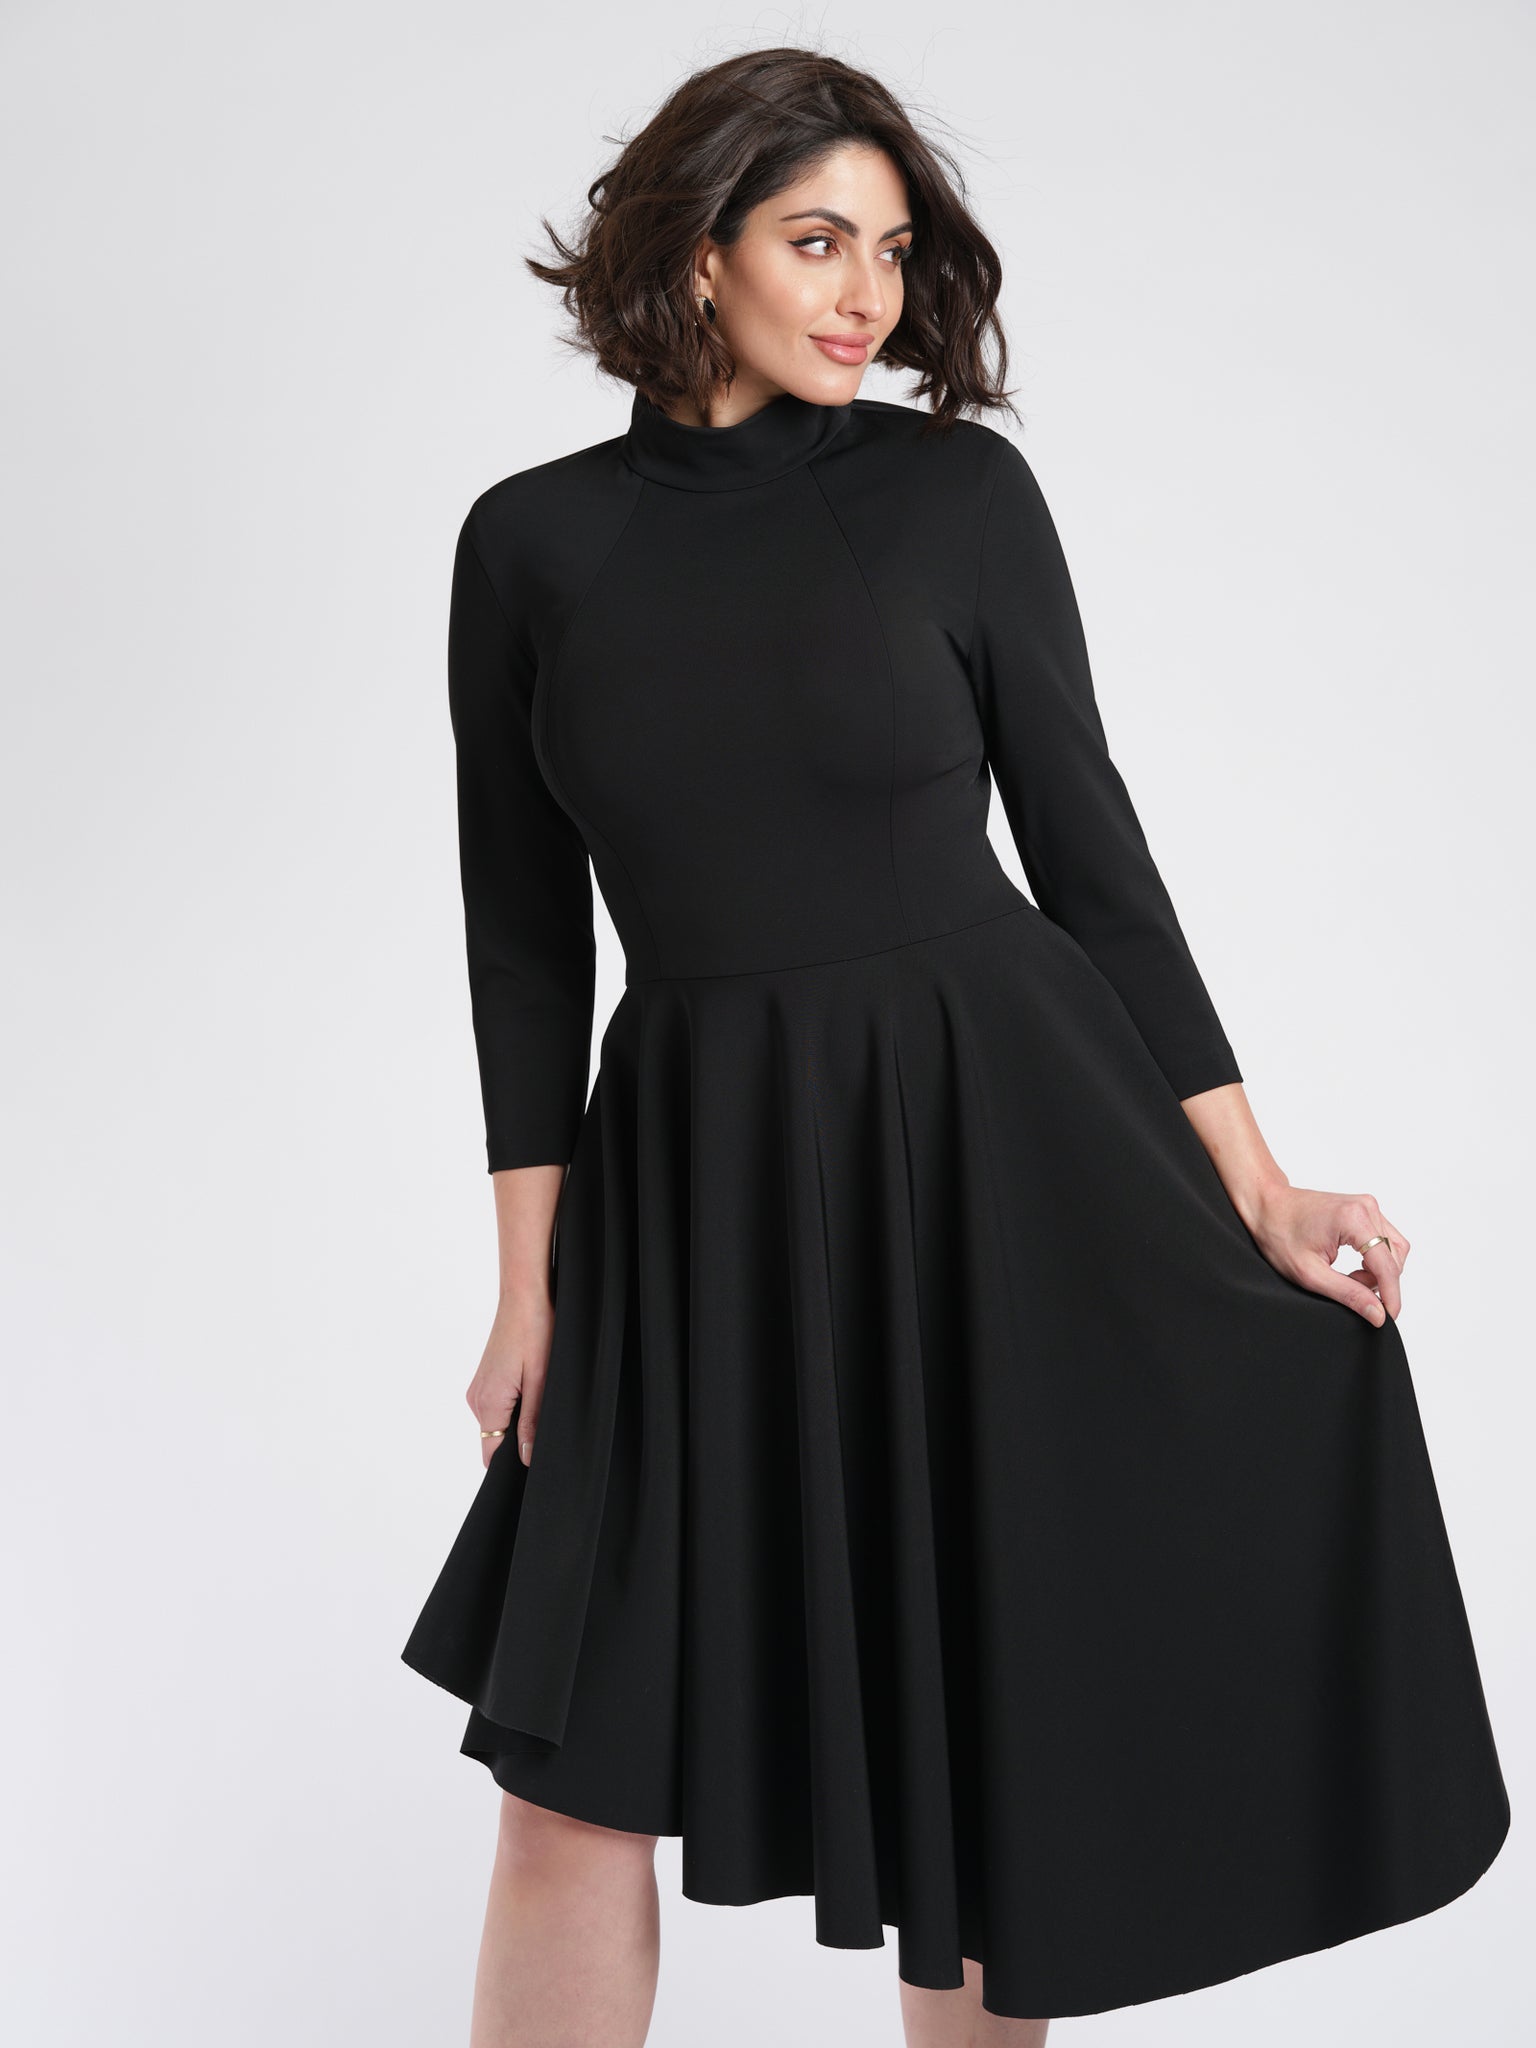 Diana Dress Black size 6 front